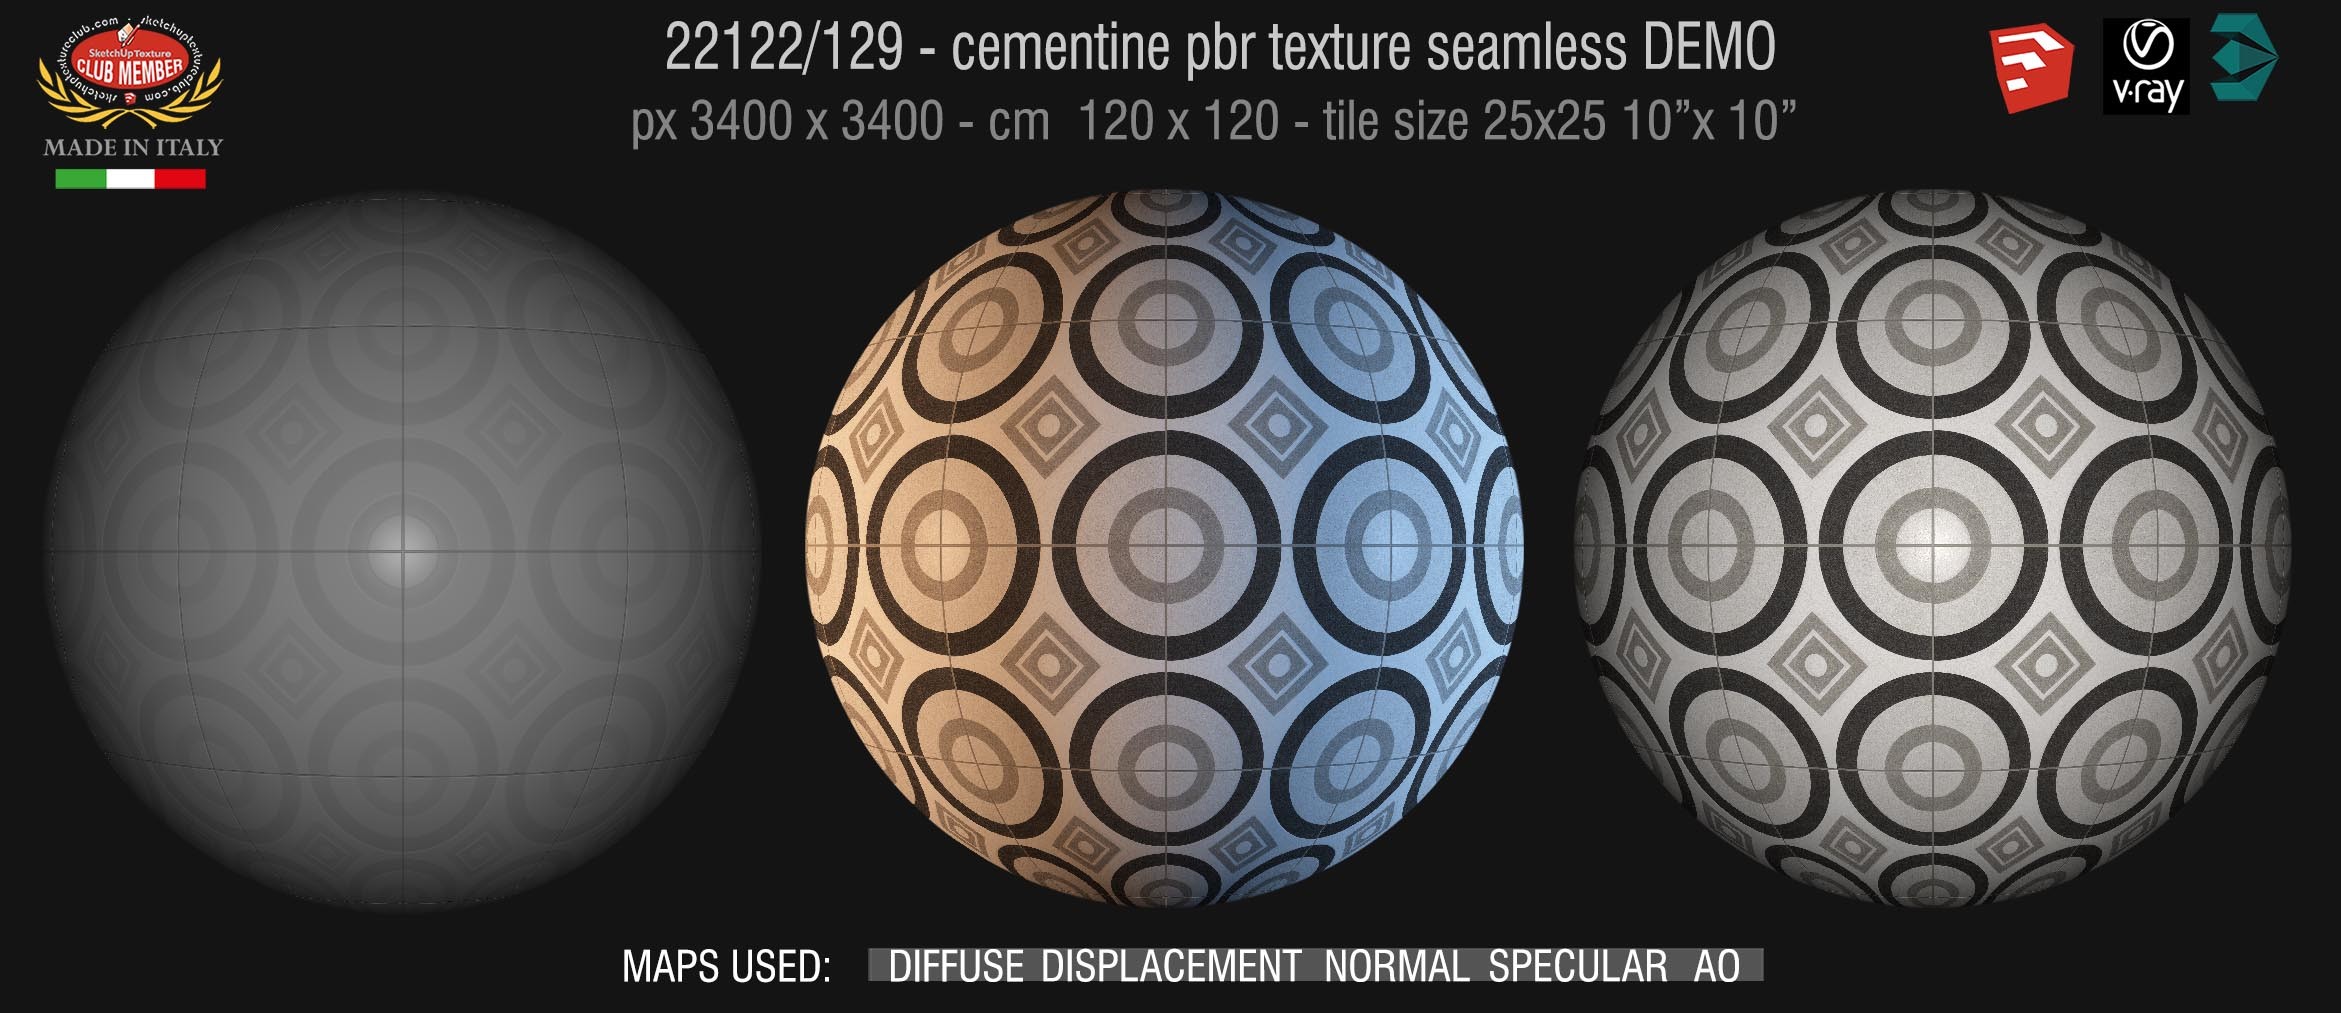 22122/129 cementine tiles Pbr seamless texture DEMO - porcelain stoneware concrete look